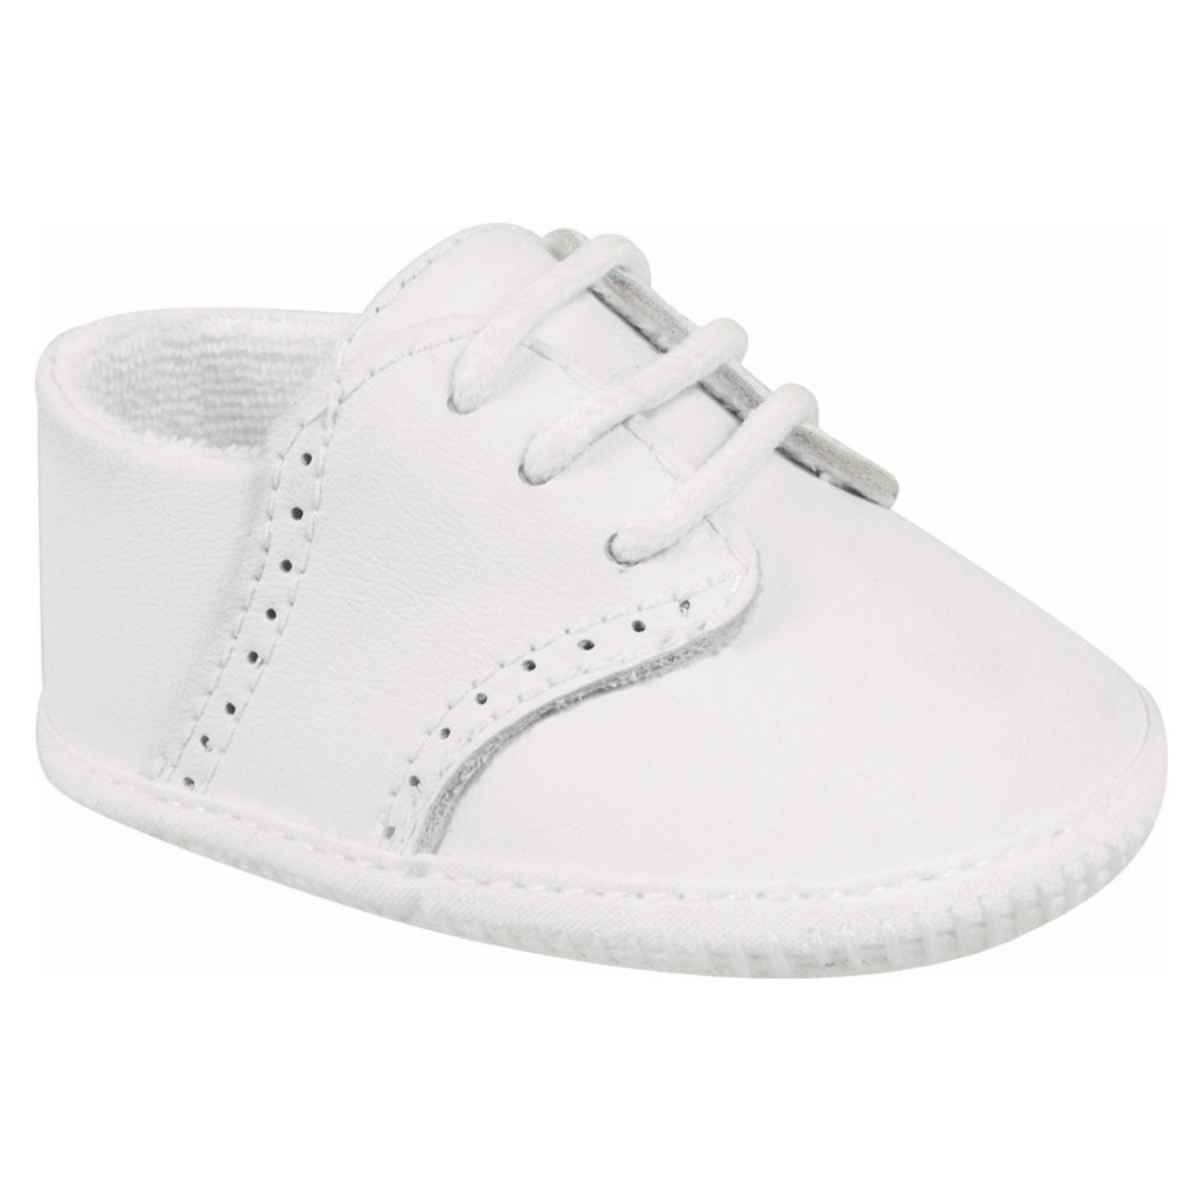 3-4 Lacoste White Infant Baby Boys Girls Crib Shoes New Born Size 1-2 